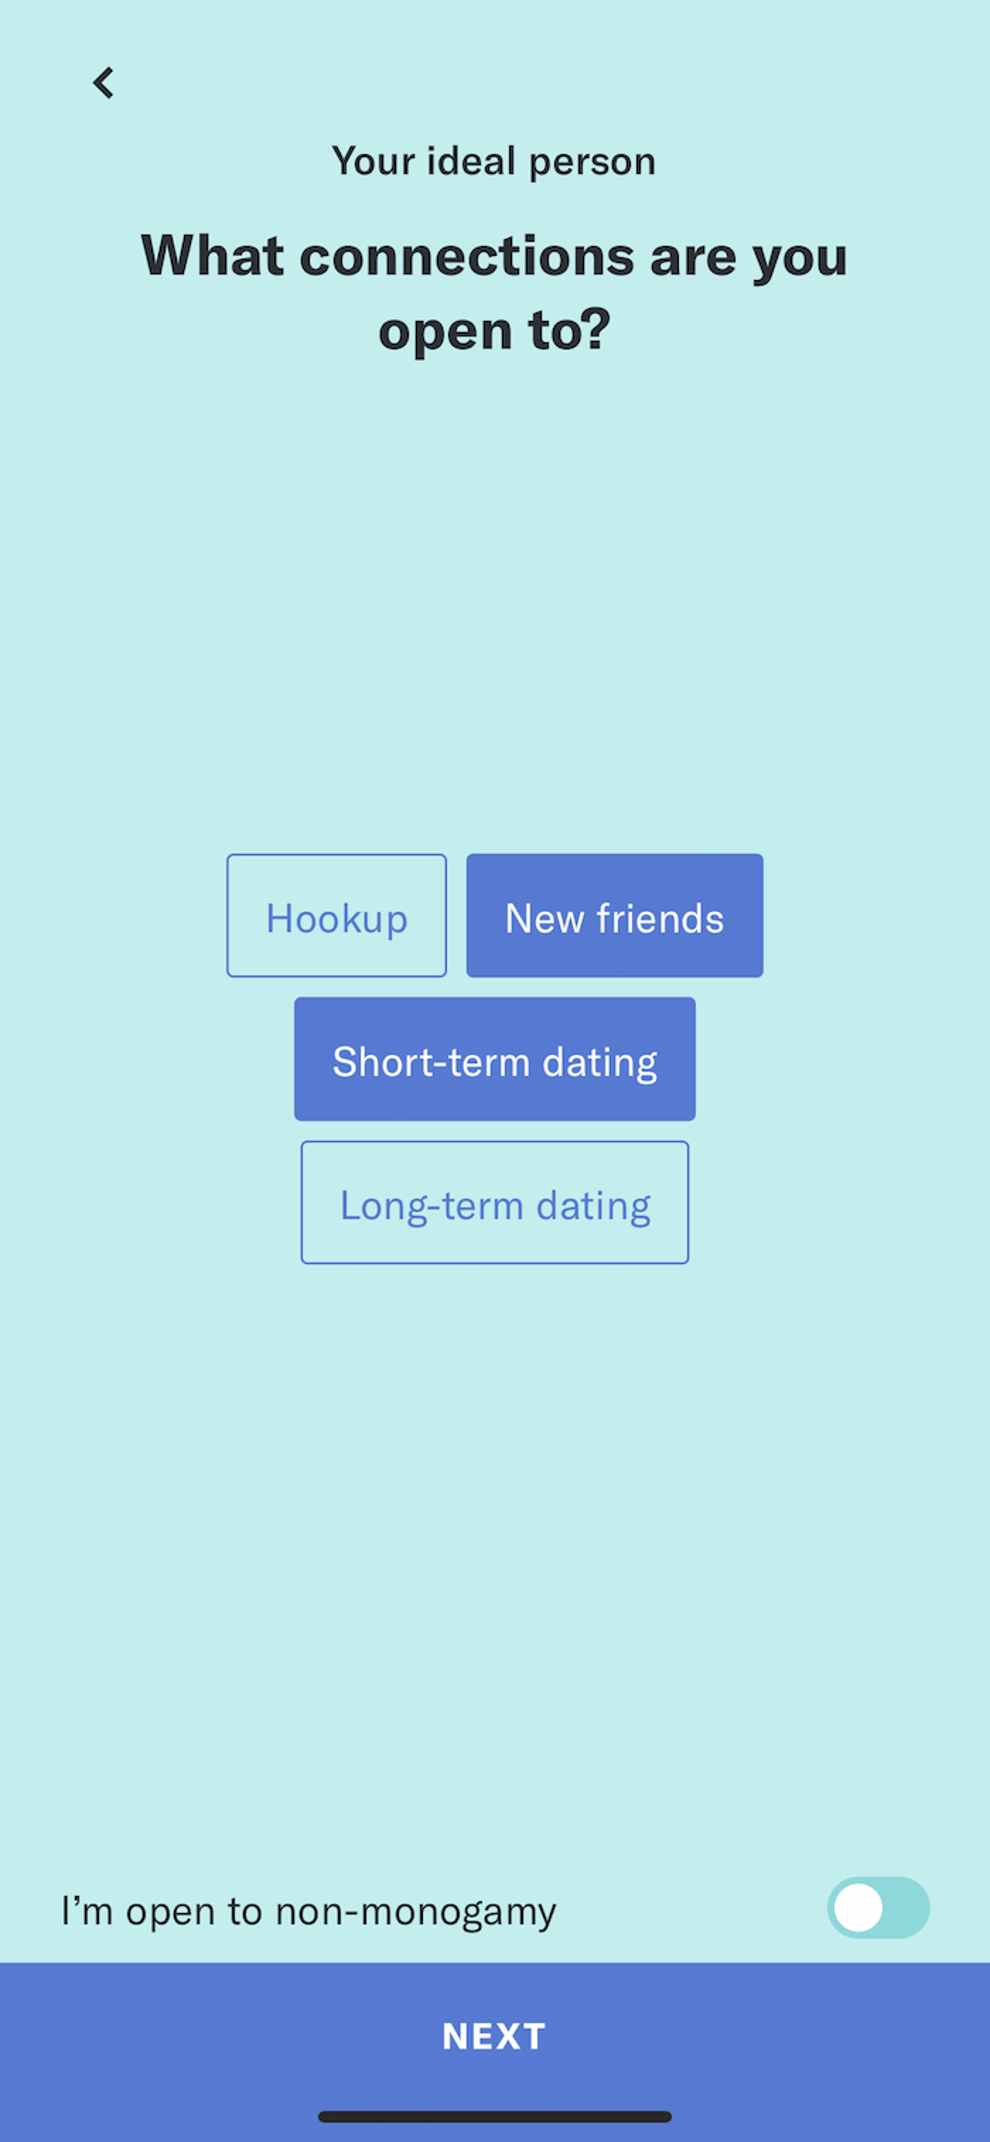 gruper dating site alpha beta dating